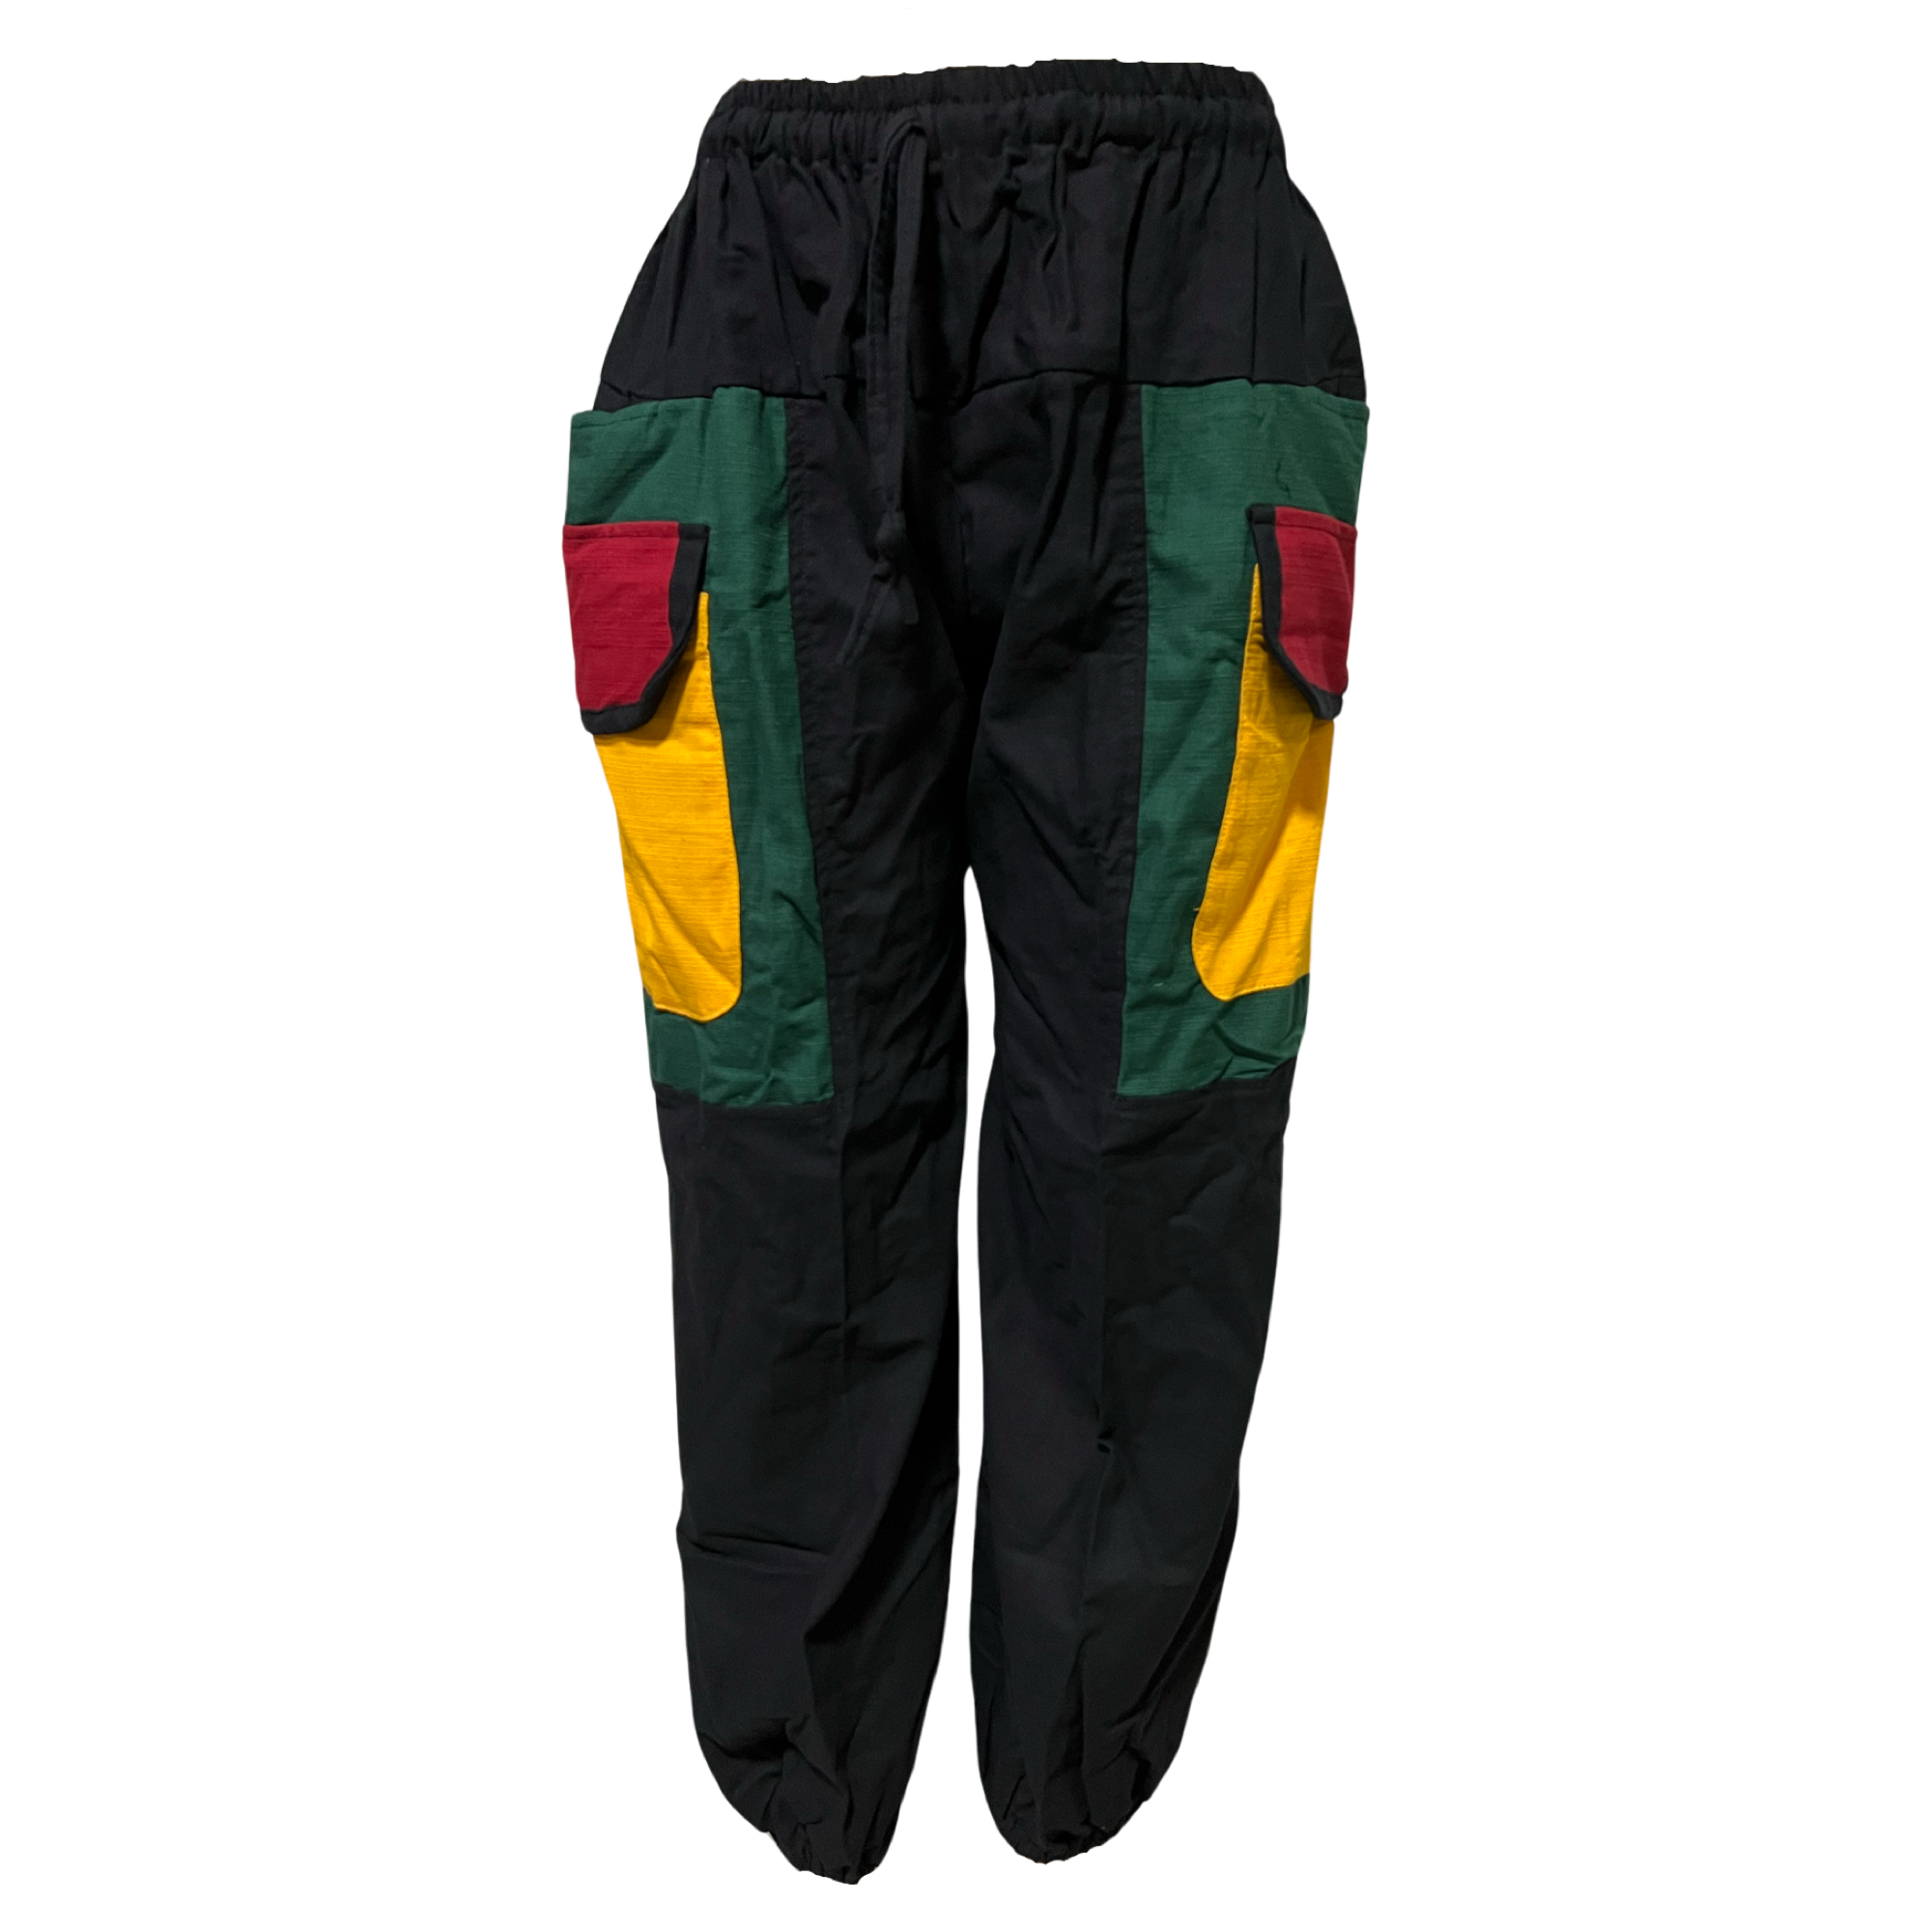 Flap Reggae Cargo Pocket Side Pants Drawstring Waist Loose Trousers Outdoor Fashion Casual Jogger Pants Streetwear W/Elastic Ankles.